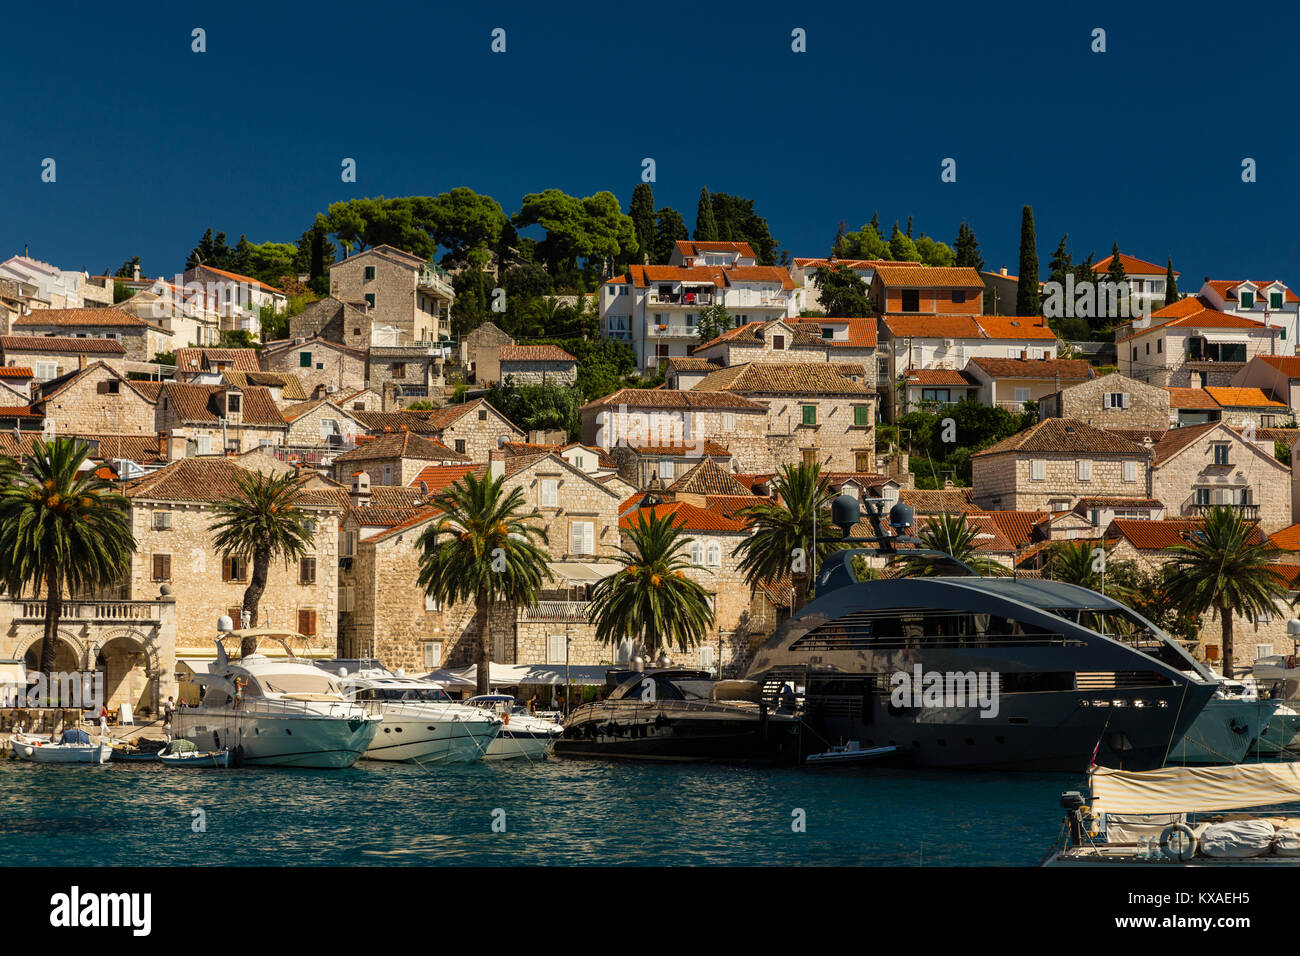 Hvar old town. Dalmatia island, Croatia. Stock Photo